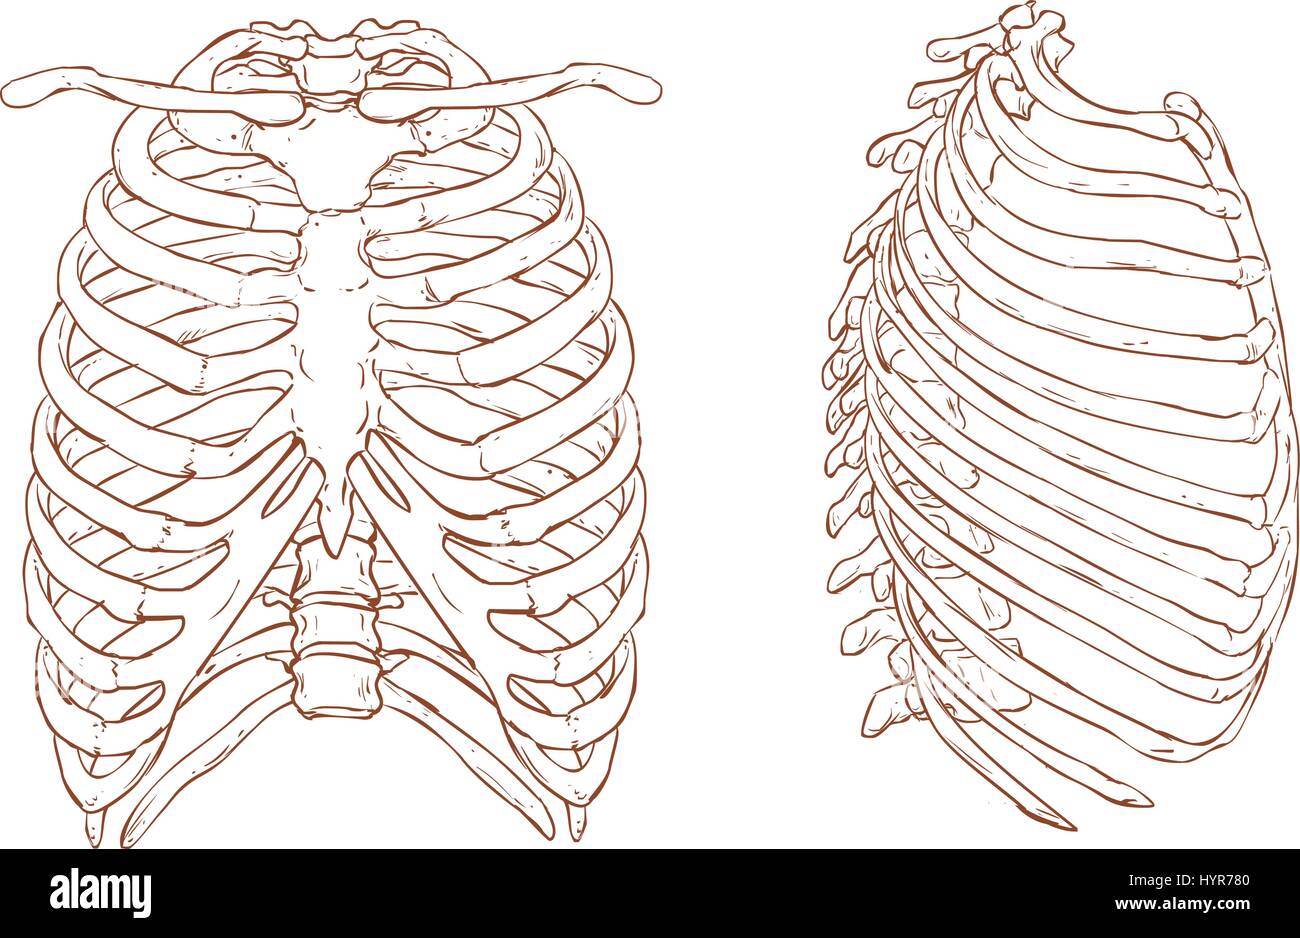 2300 Human Rib Cage Illustrations RoyaltyFree Vector Graphics  Clip  Art  iStock  Skeleton Human heart Human skeleton